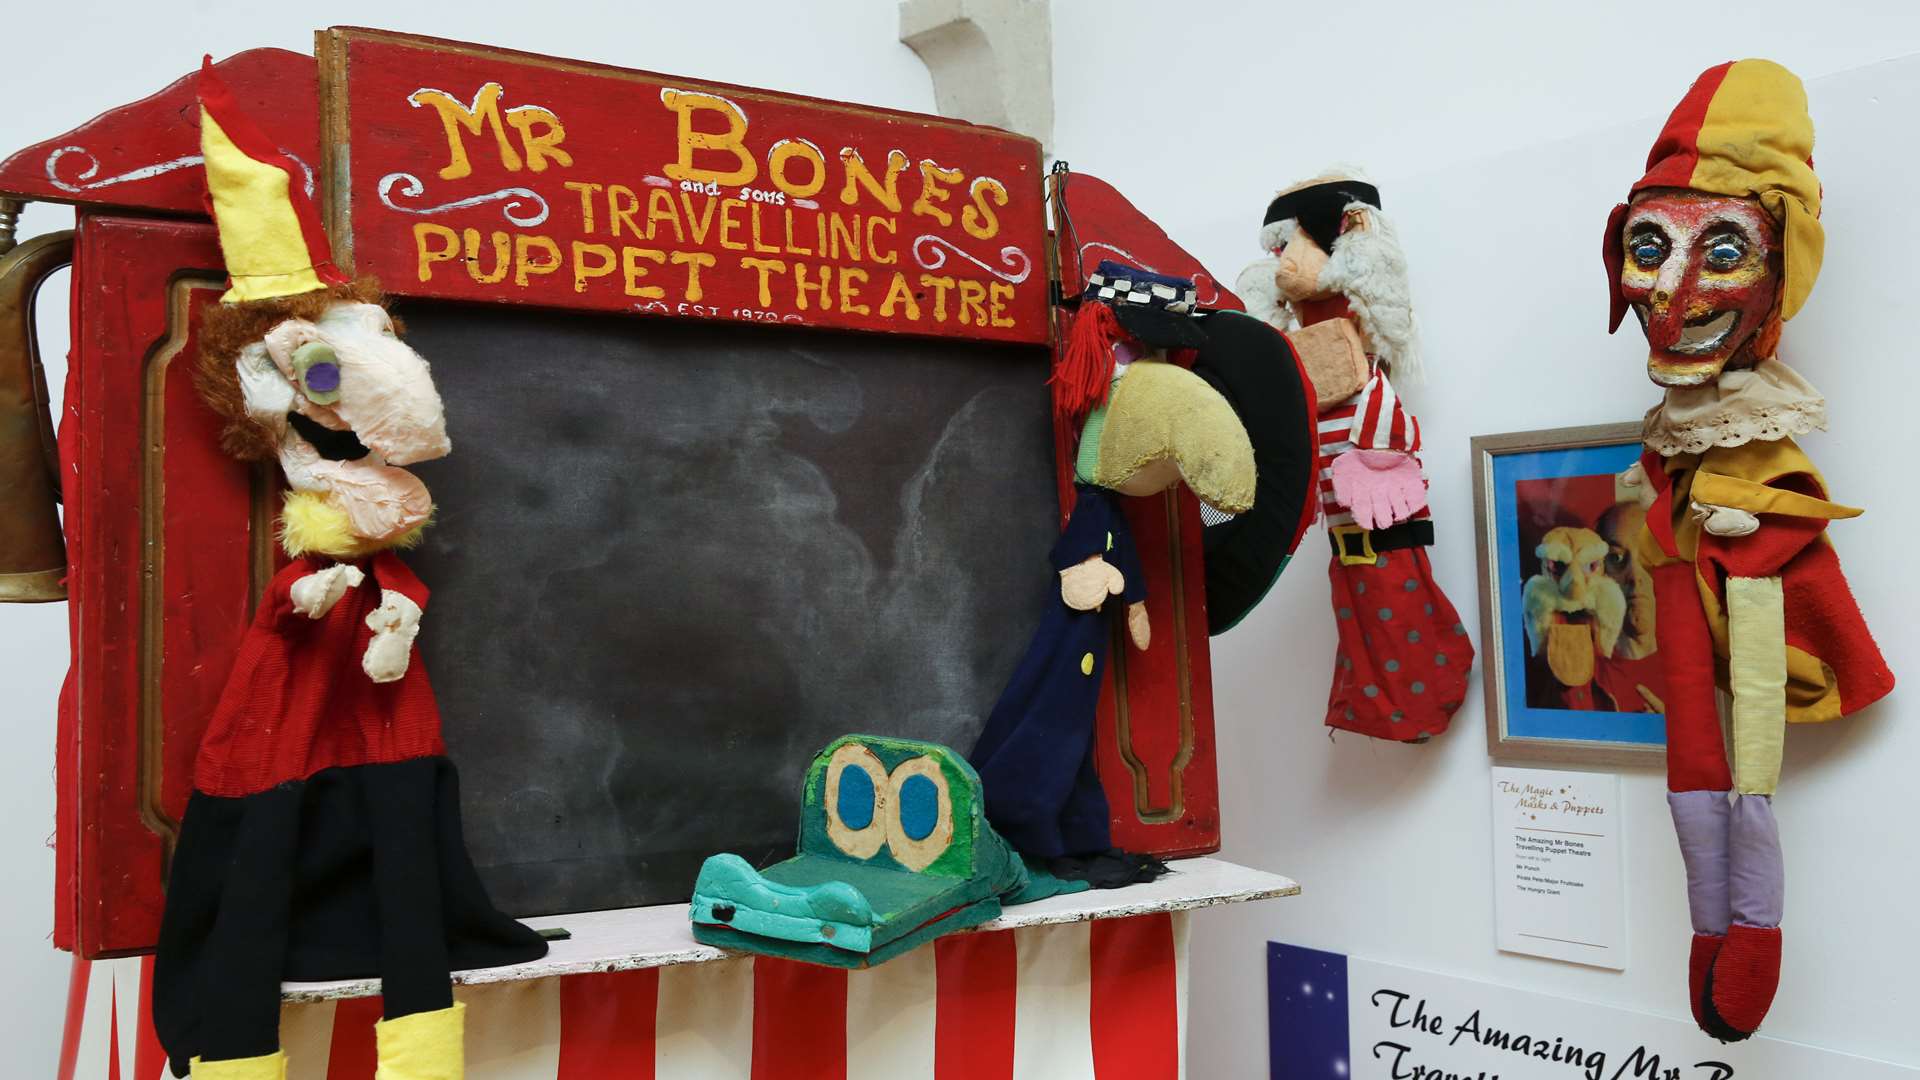 The Amazing Mr Bones travelling puppet show